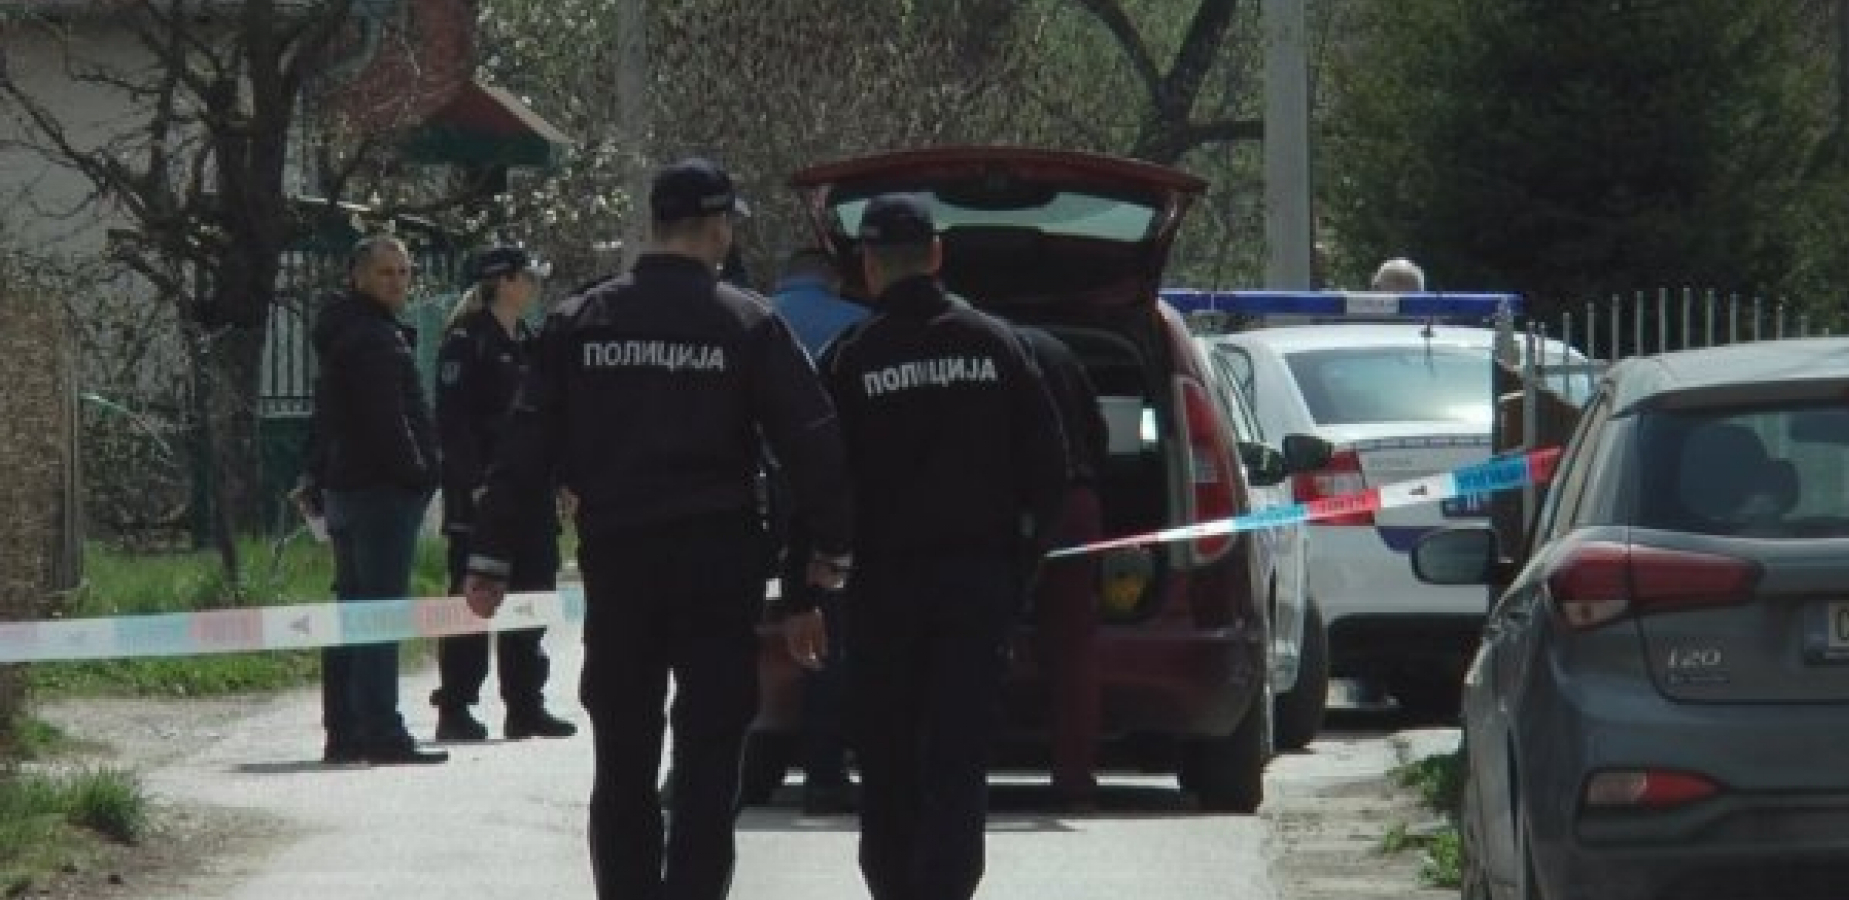 PRONAĐEN LEŠ MLADIĆA Užasna scena u Bačkoj Palanci šokirala građane